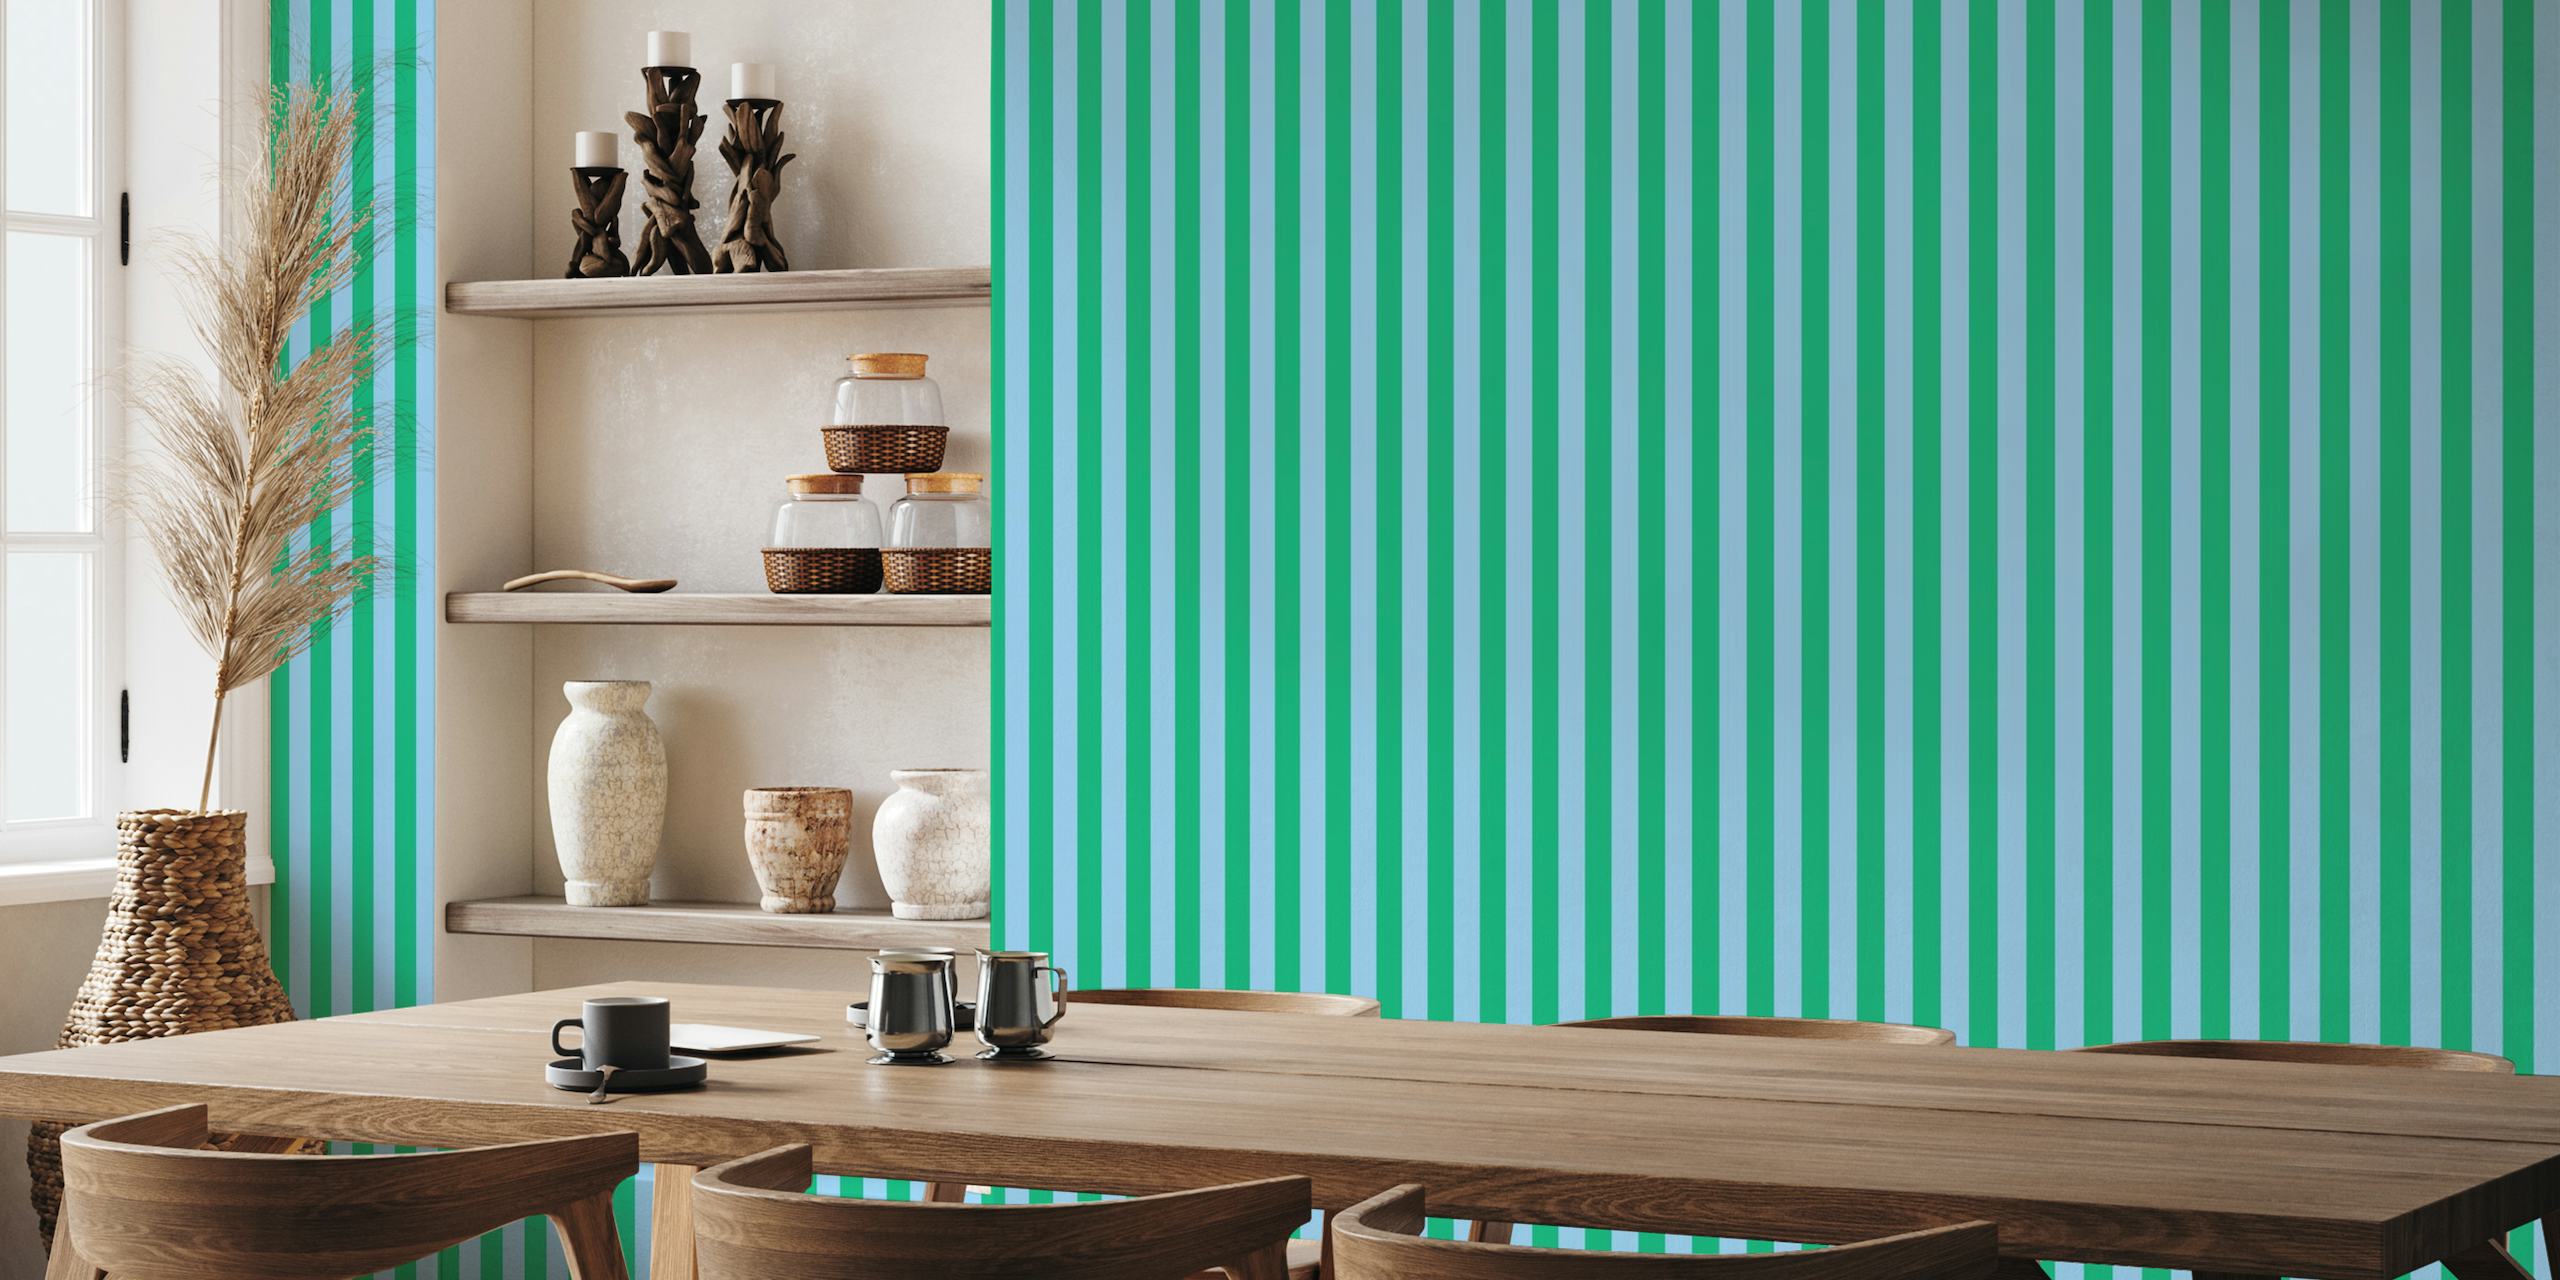 Green and blue stripes papel pintado